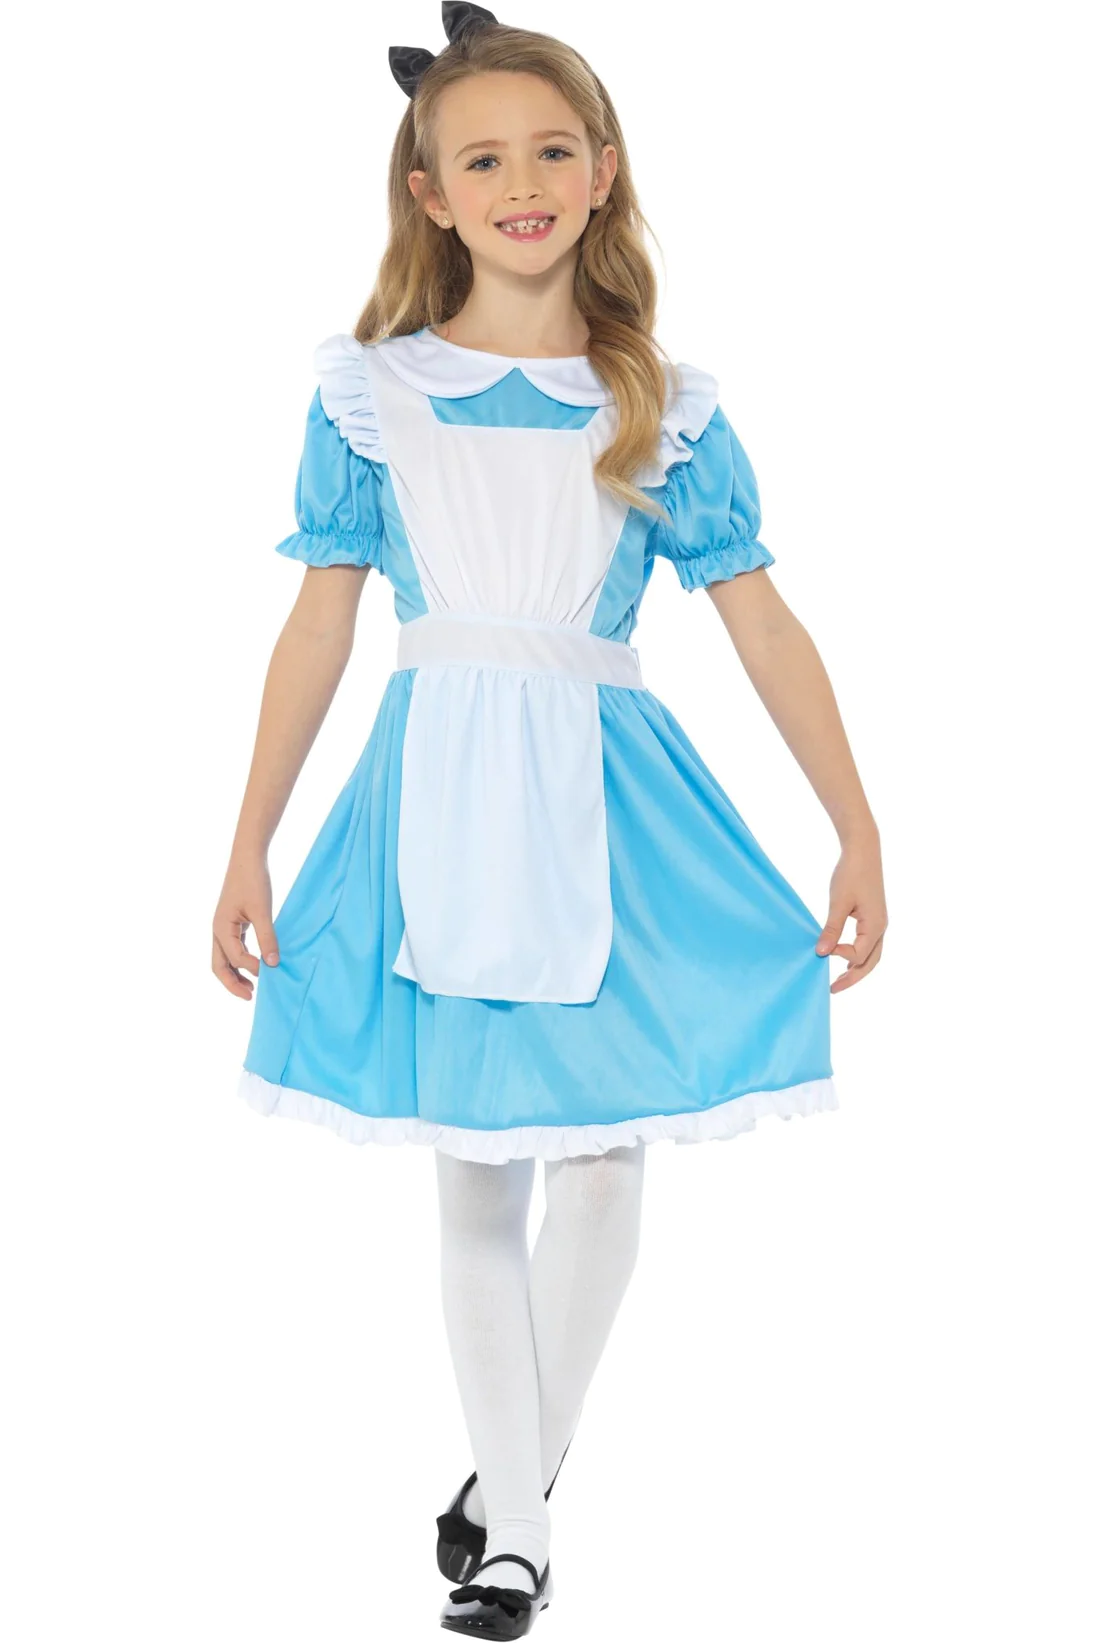 Alice Child Girls Costume- By Karnival